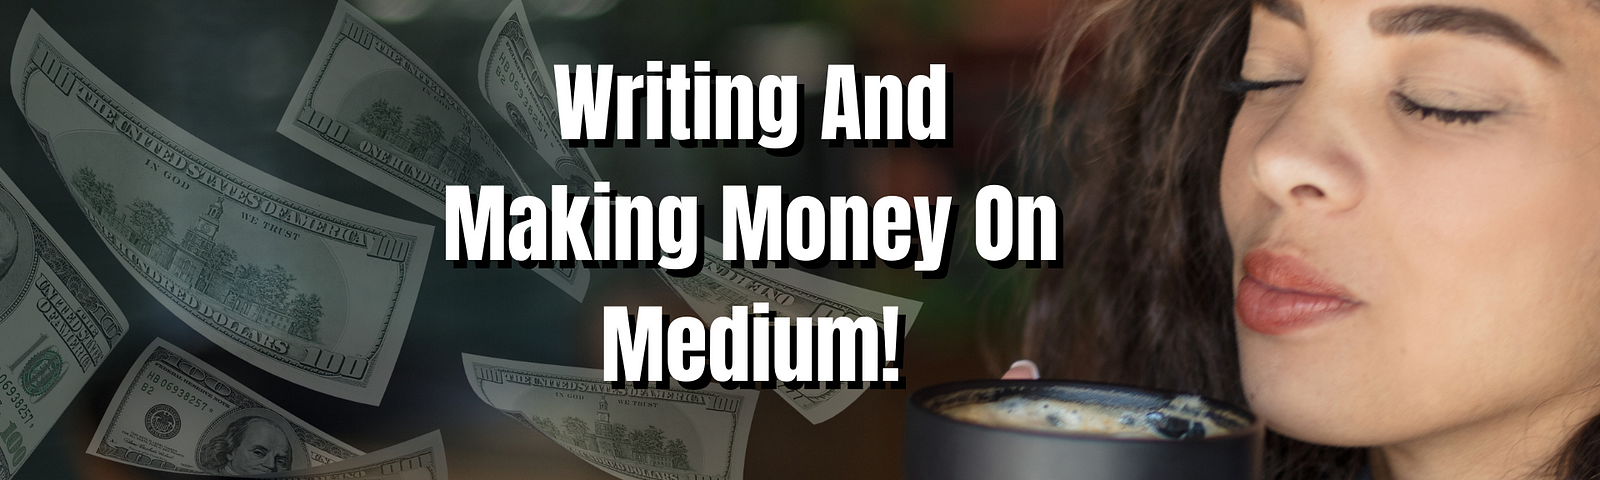 writing and making money online on medium